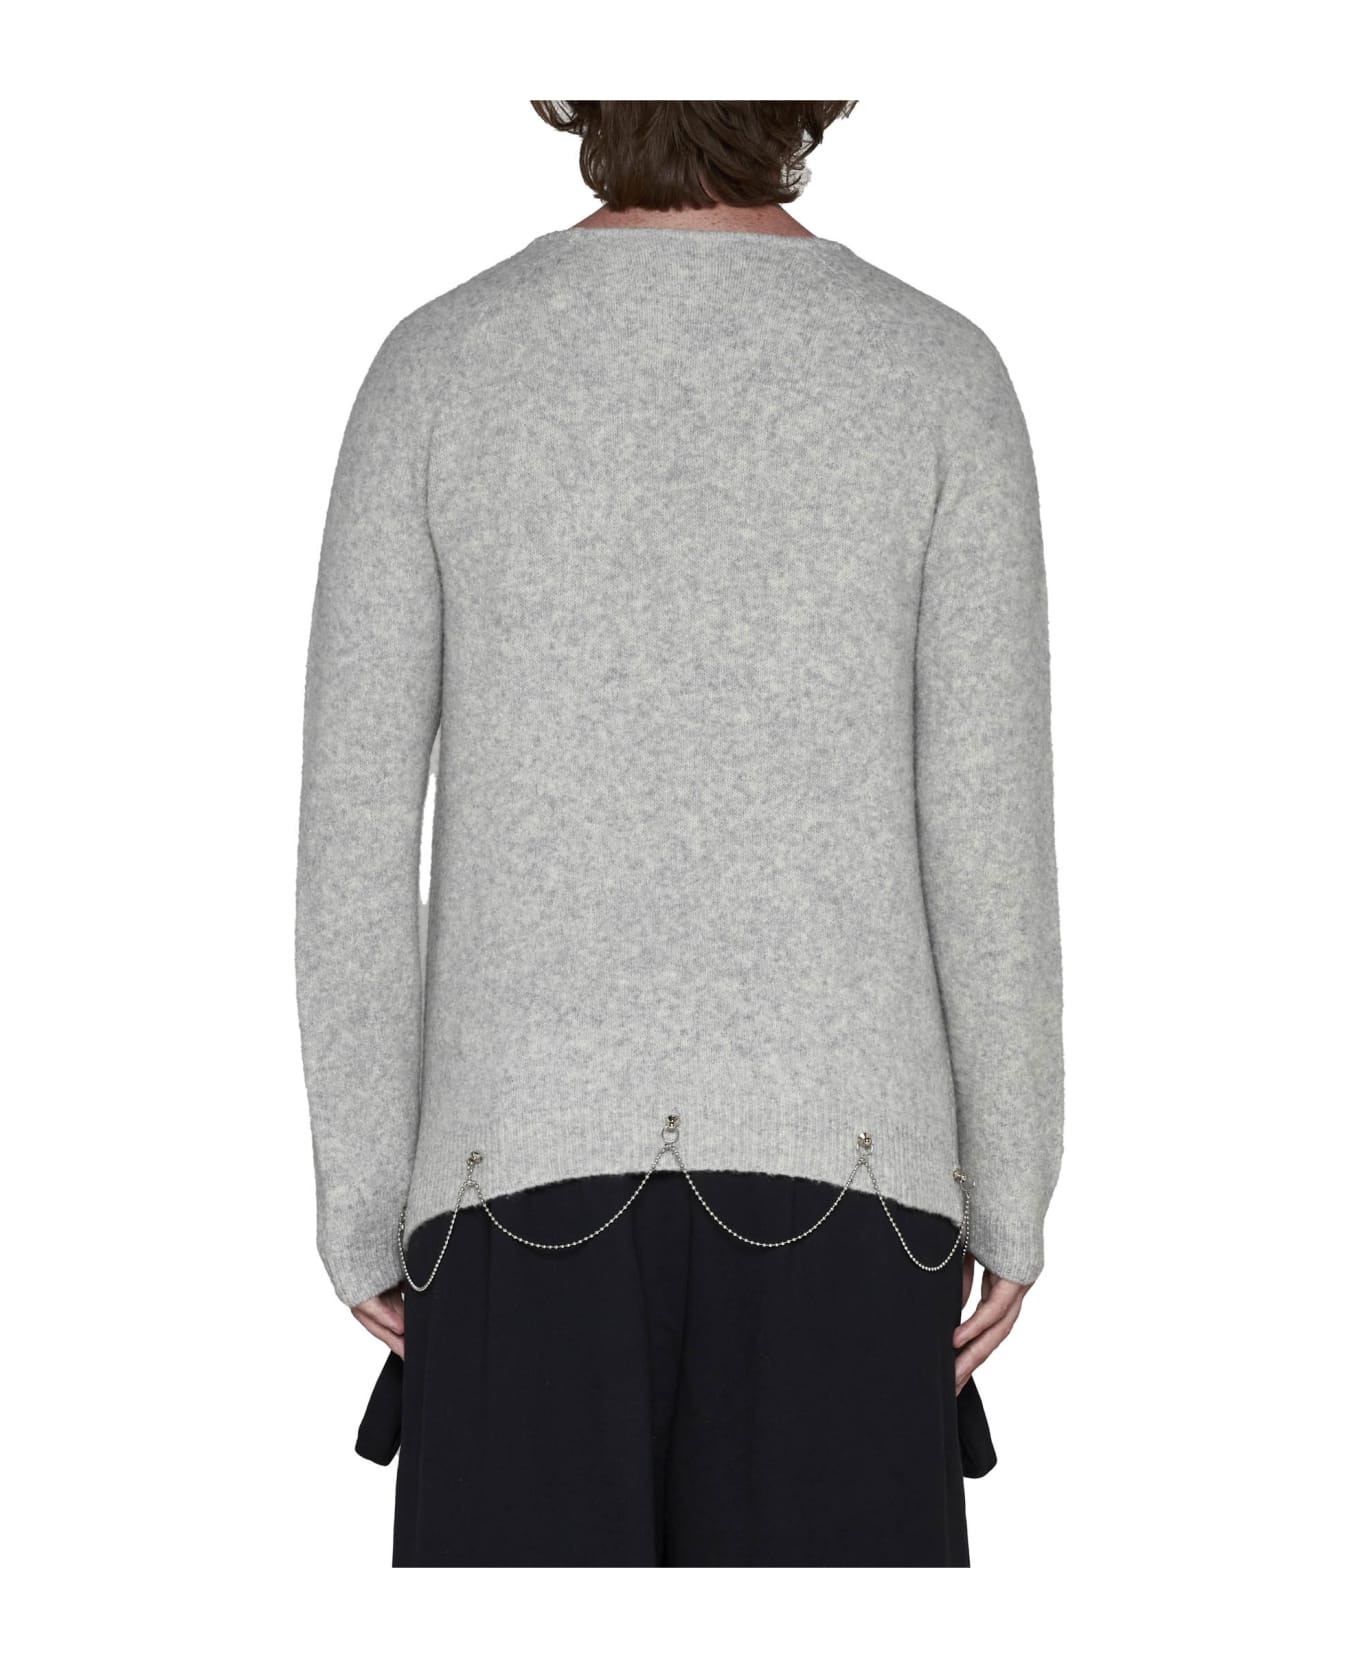 Random Identities Sweater - Light grey ニットウェア